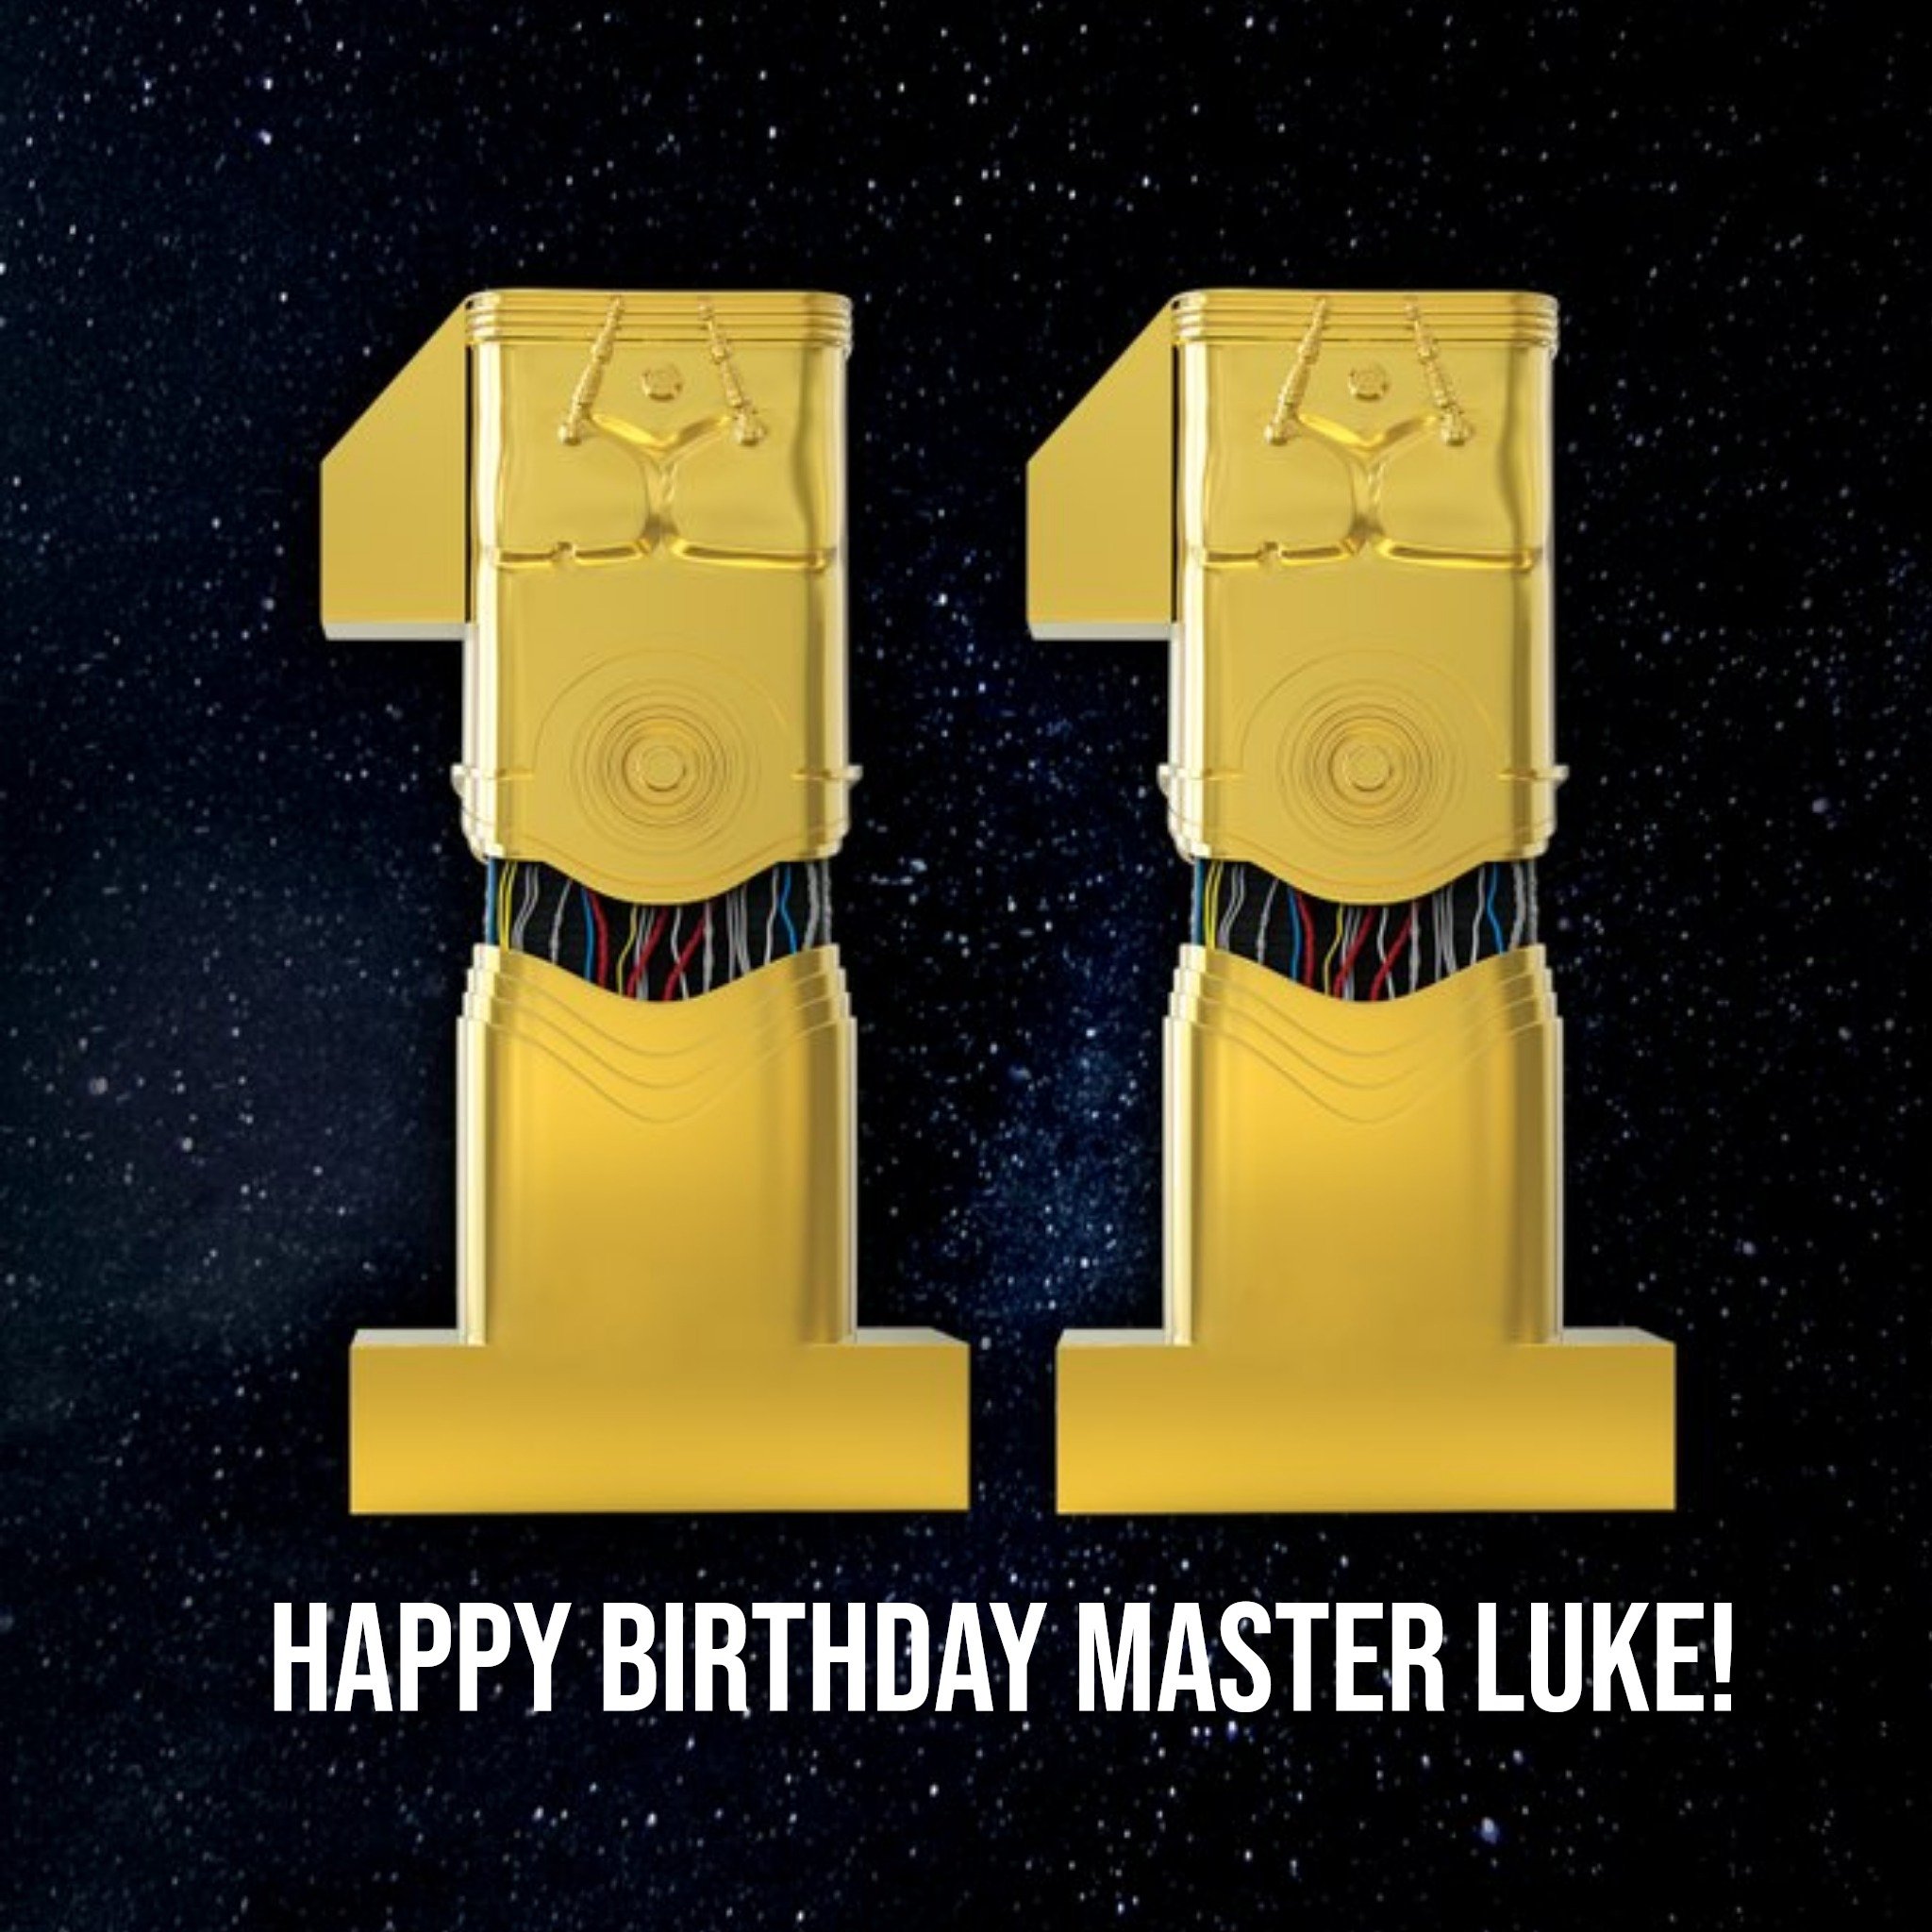 Disney Star Wars 11 Today Birthday Card, Large